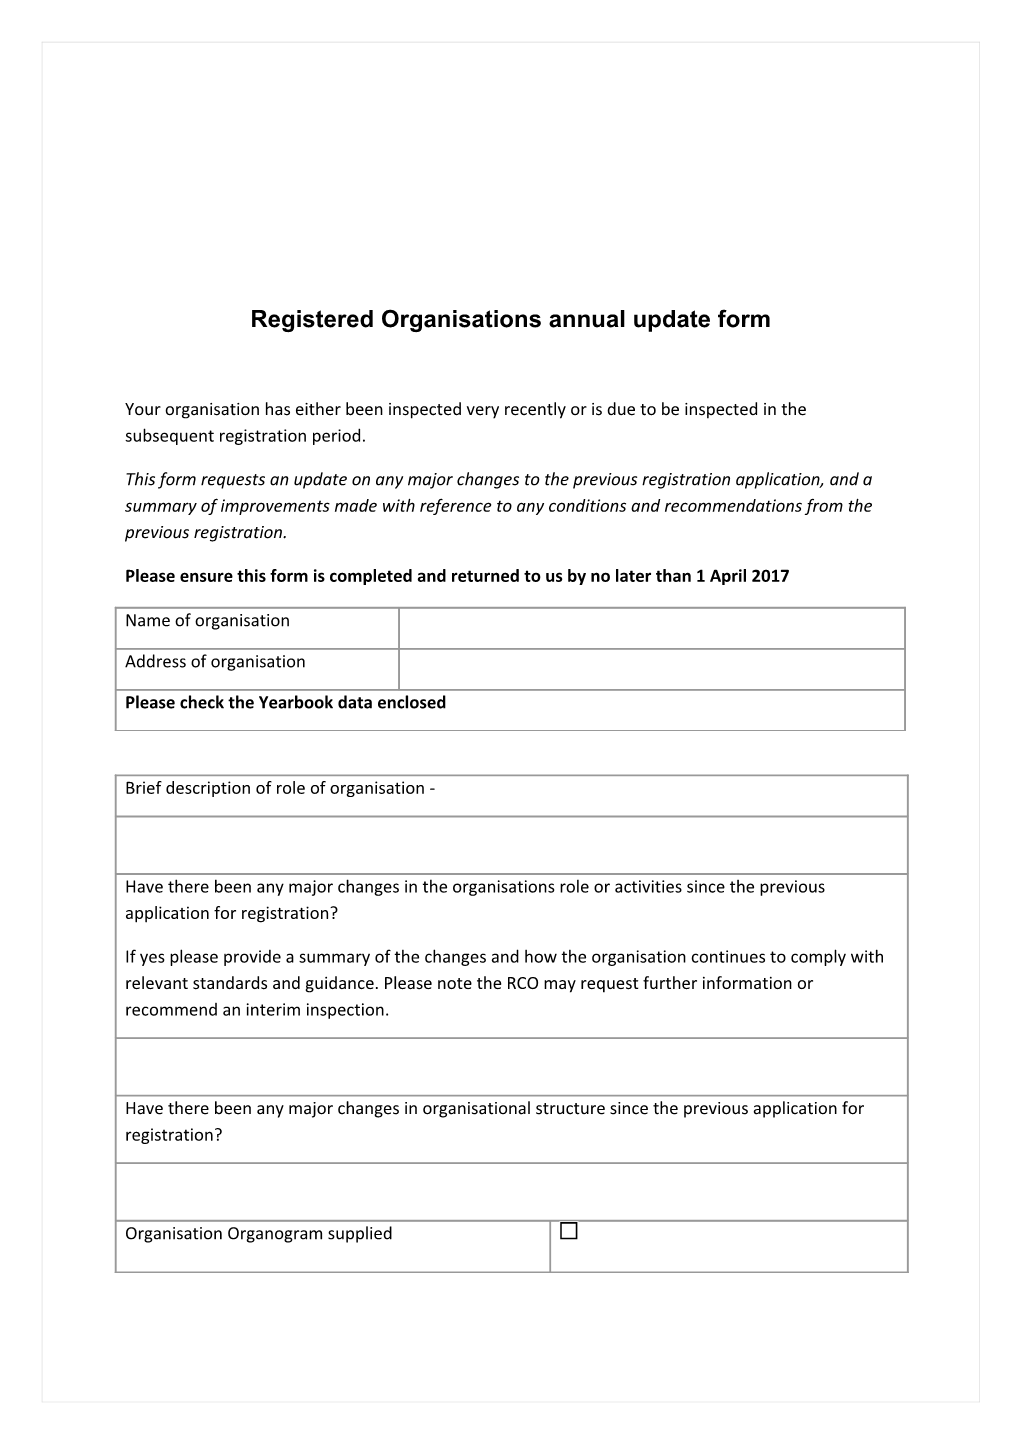 Registered Organisationsannual Update Form